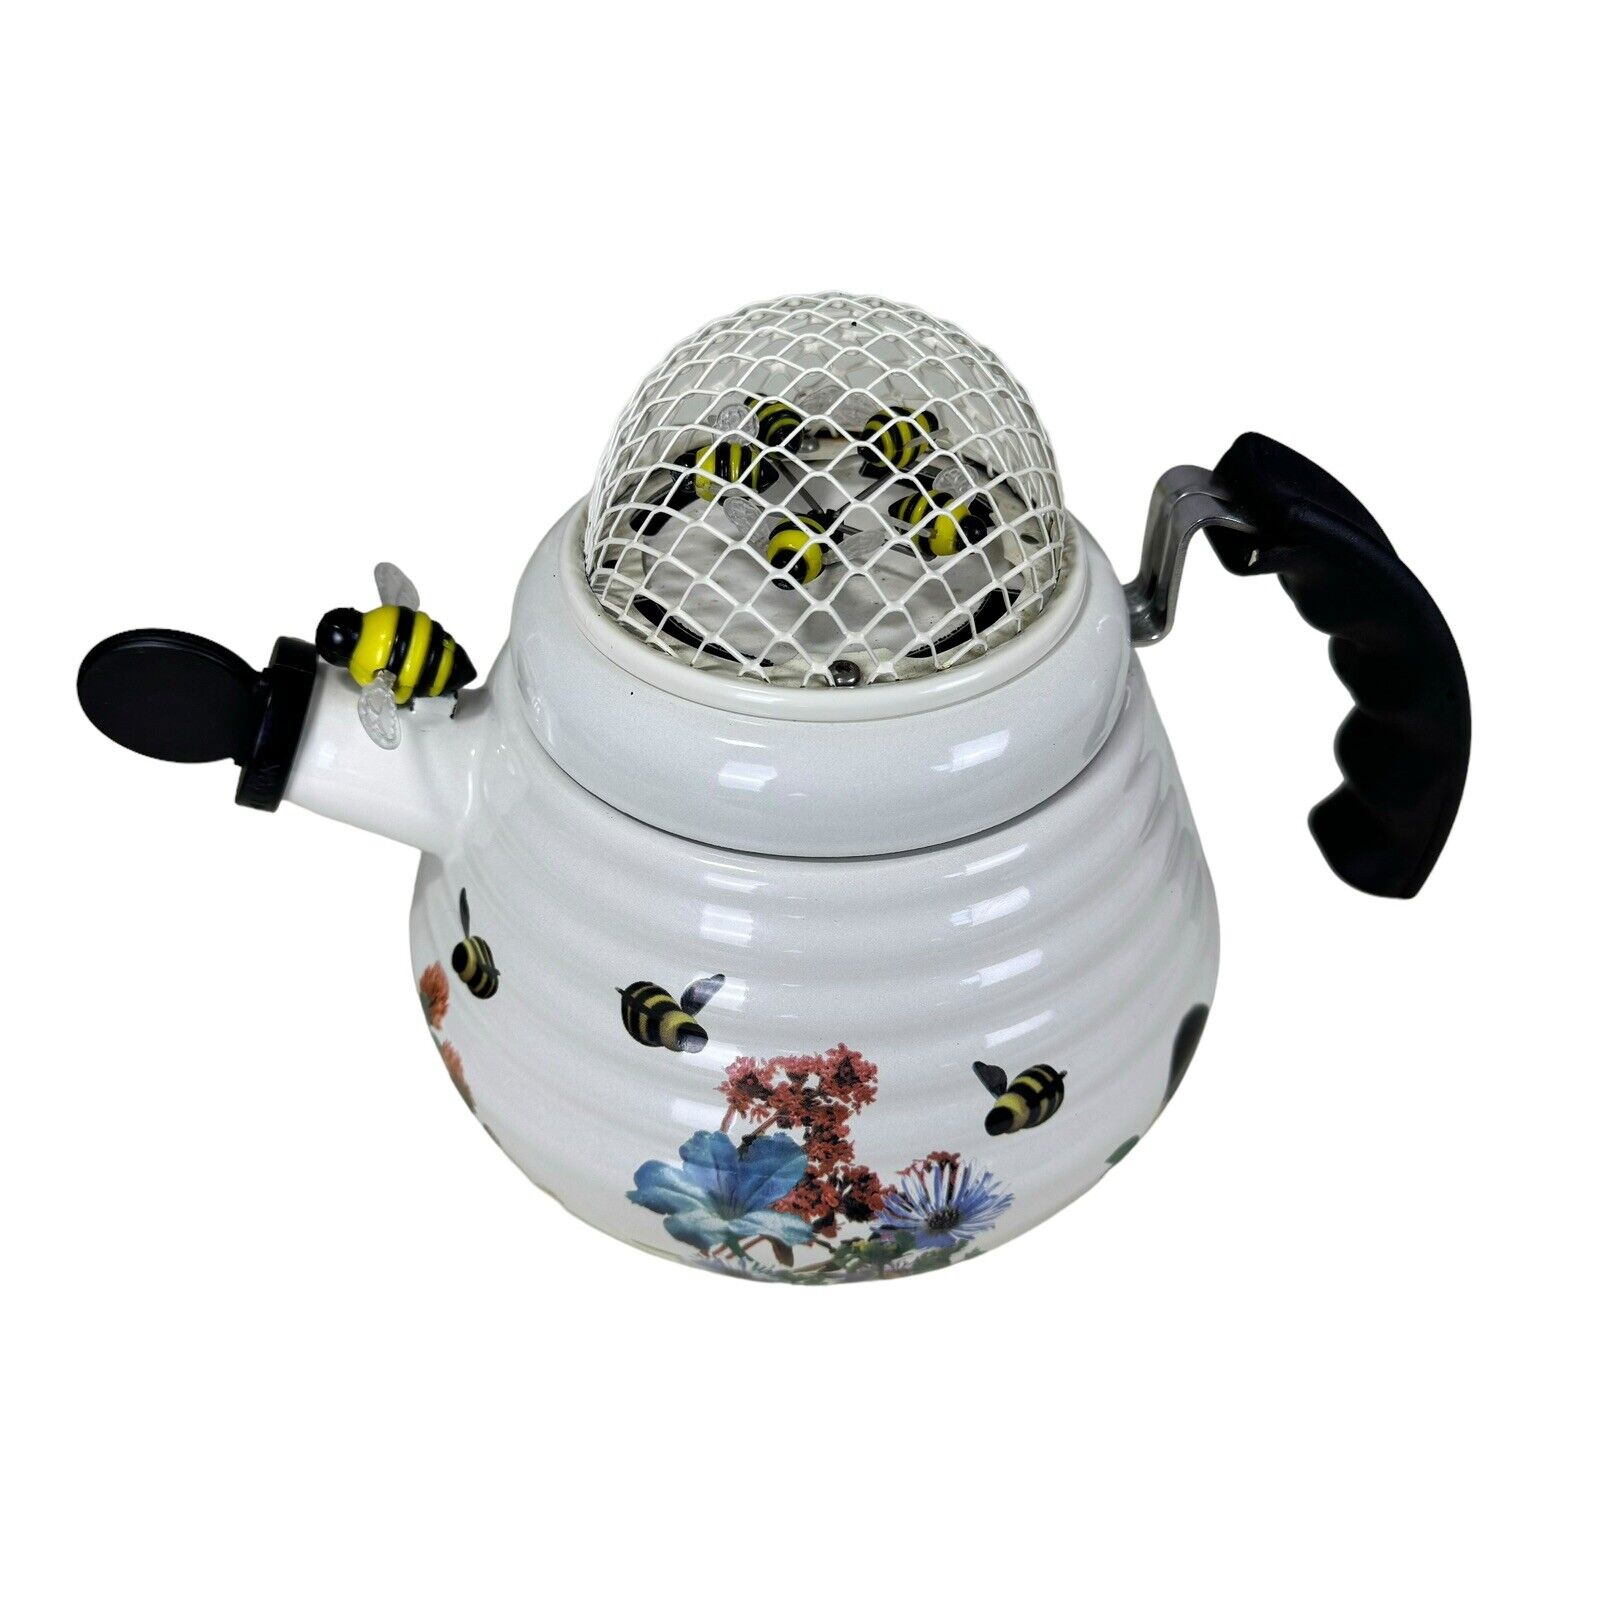 MM Kamenstein BUMBLE BEE tea kettle teapot RARE Metal Spin Spinning Bees